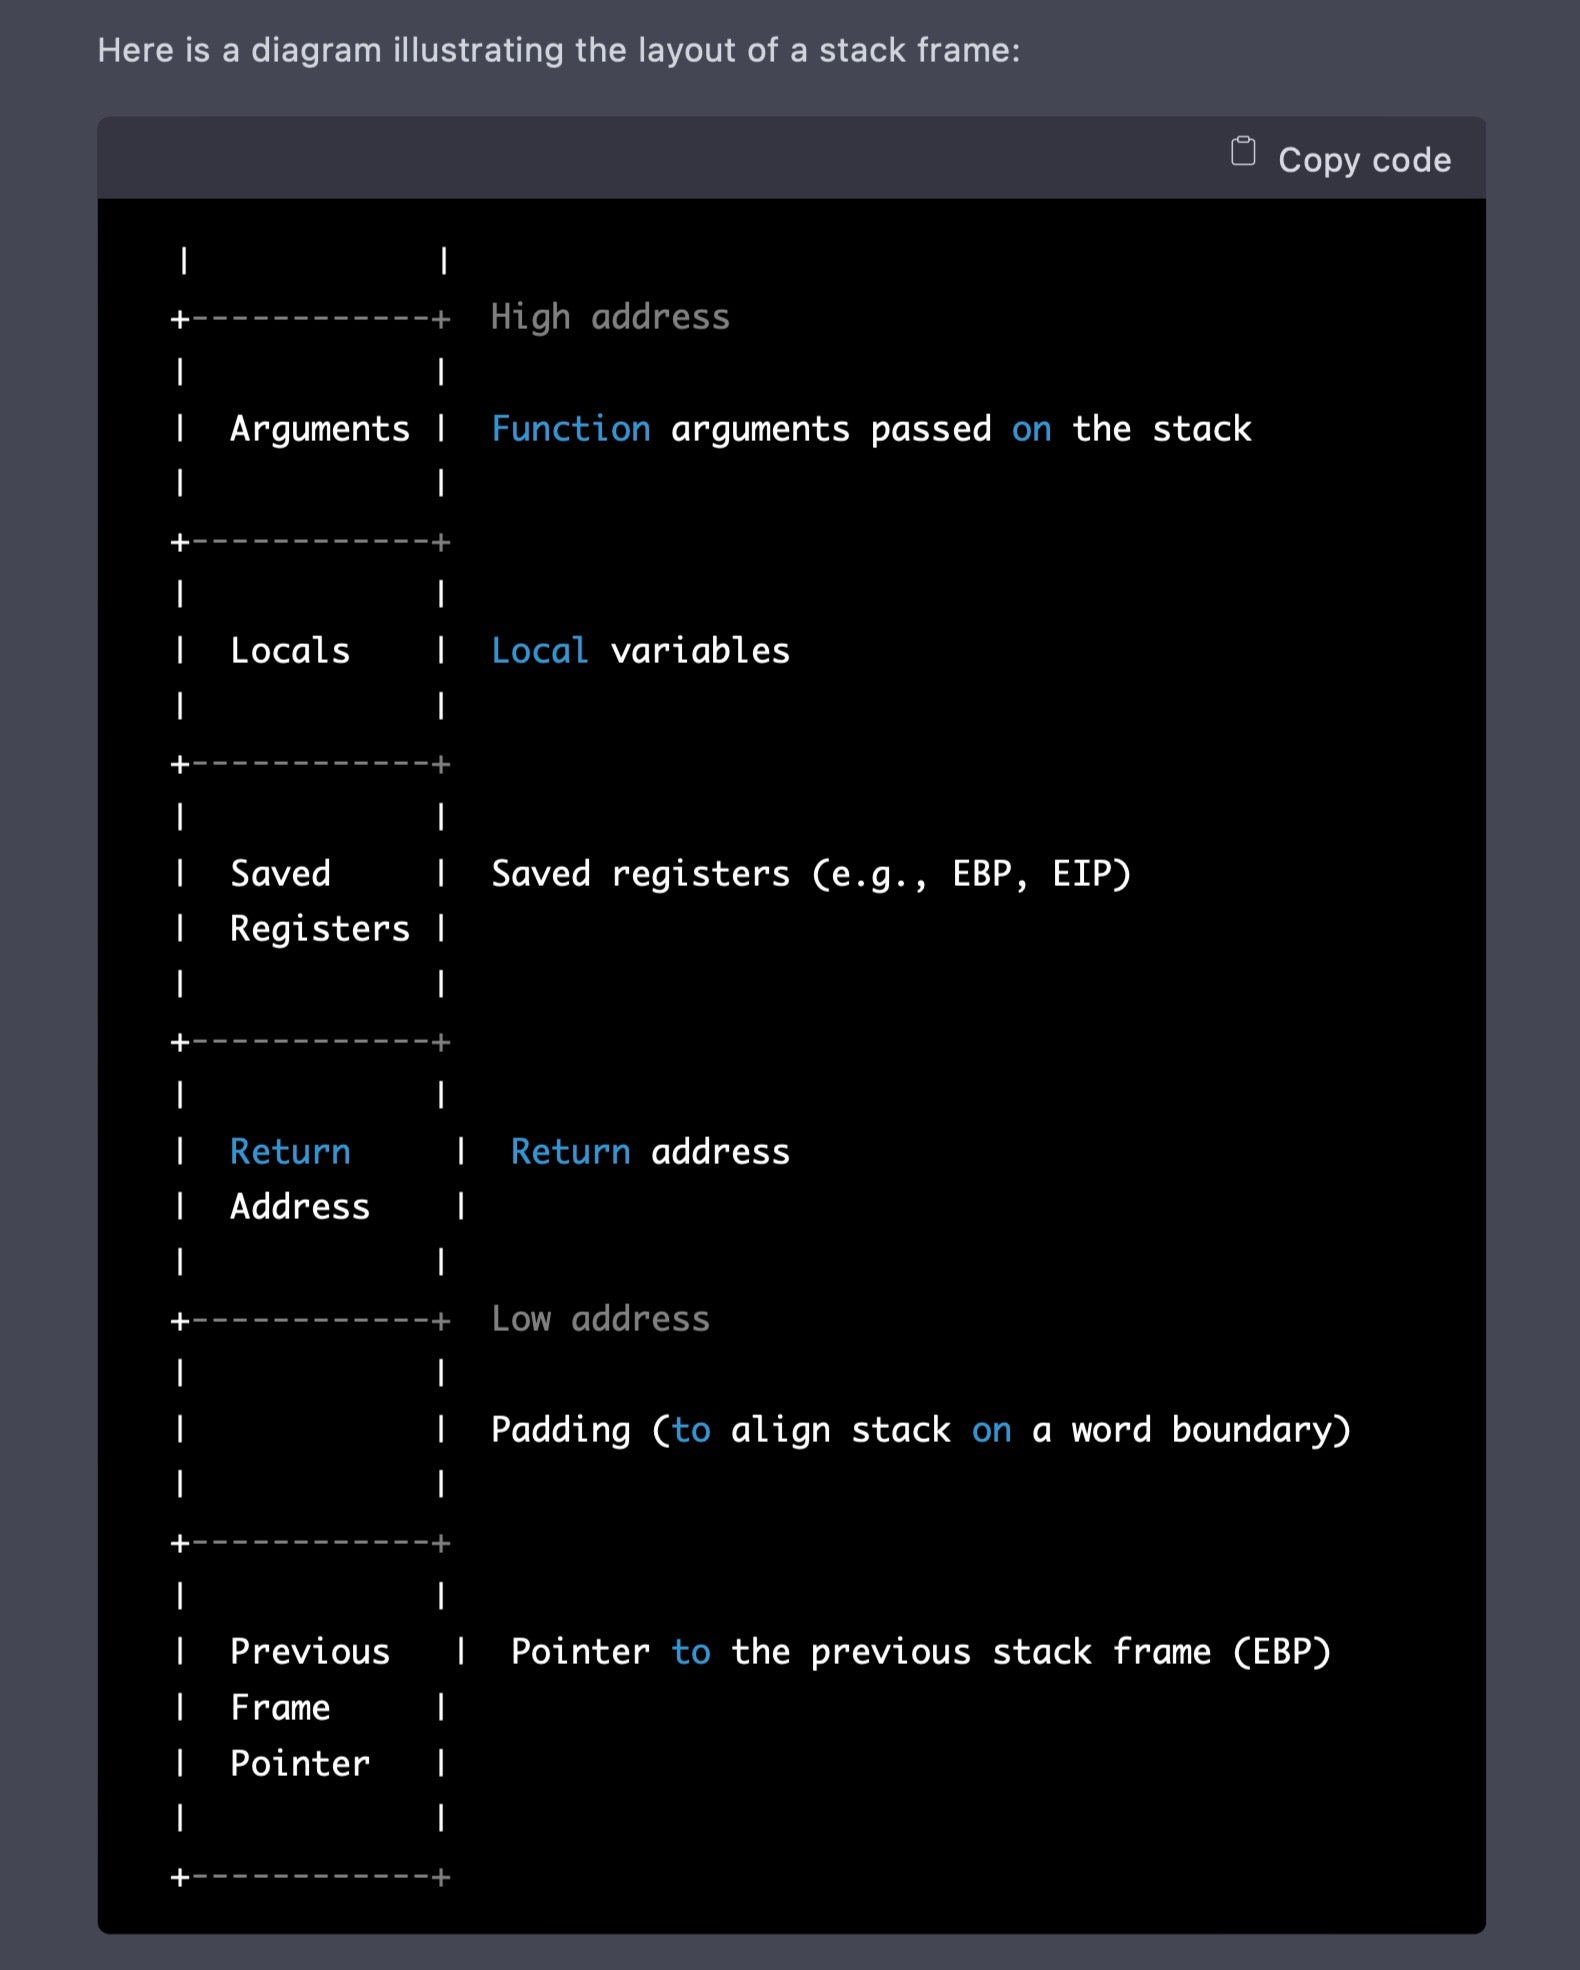 ChatGPT depicts a stack frame